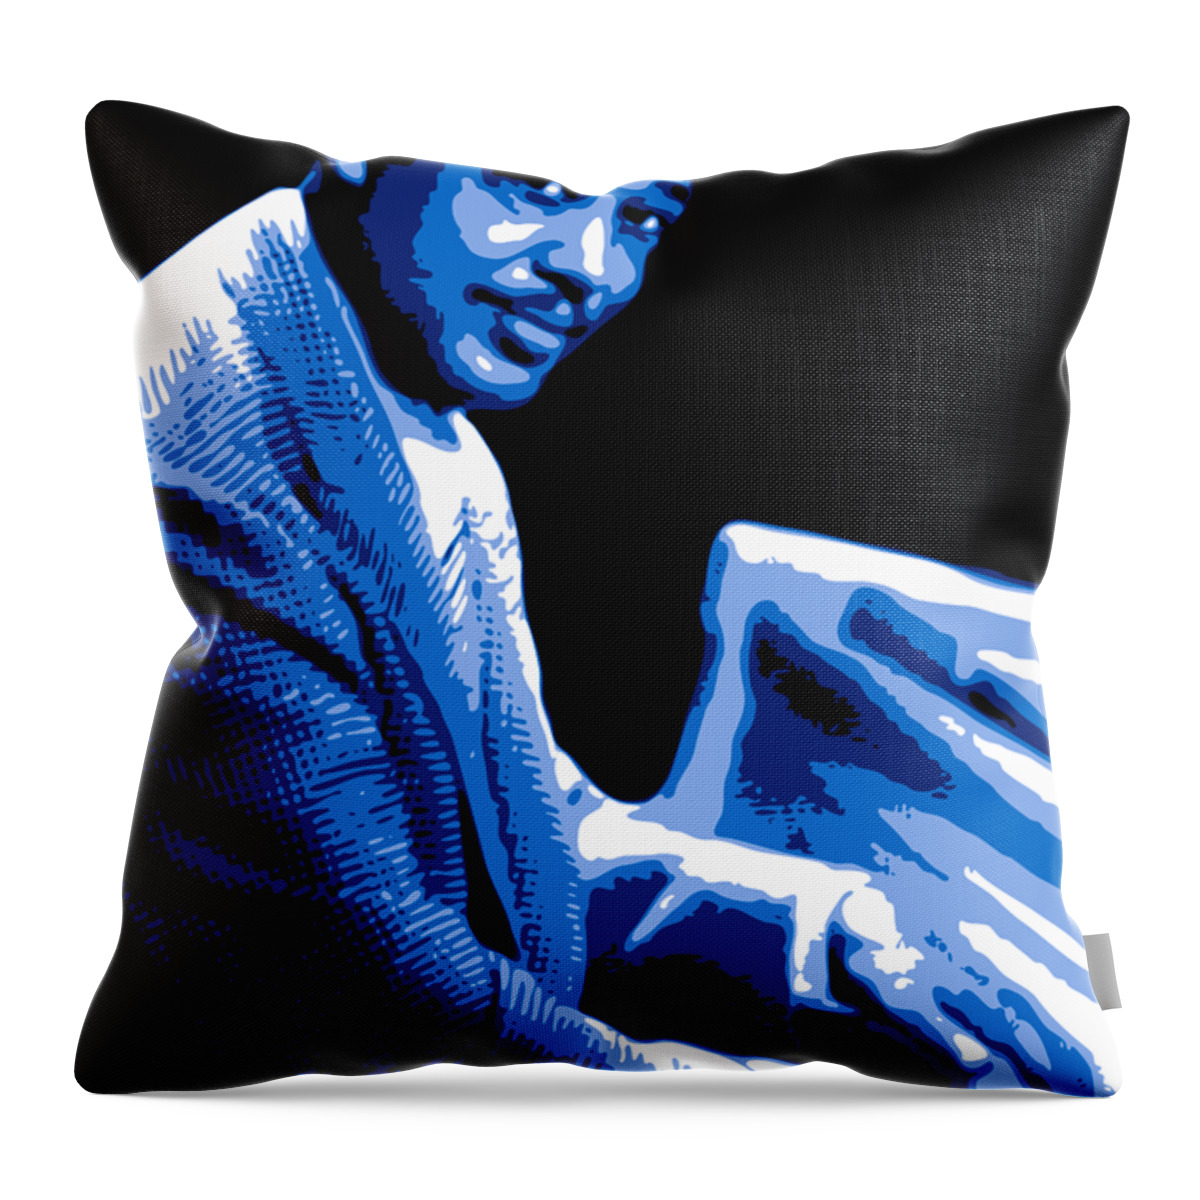 Duke Ellington Throw Pillow featuring the digital art Duke Ellington by DB Artist